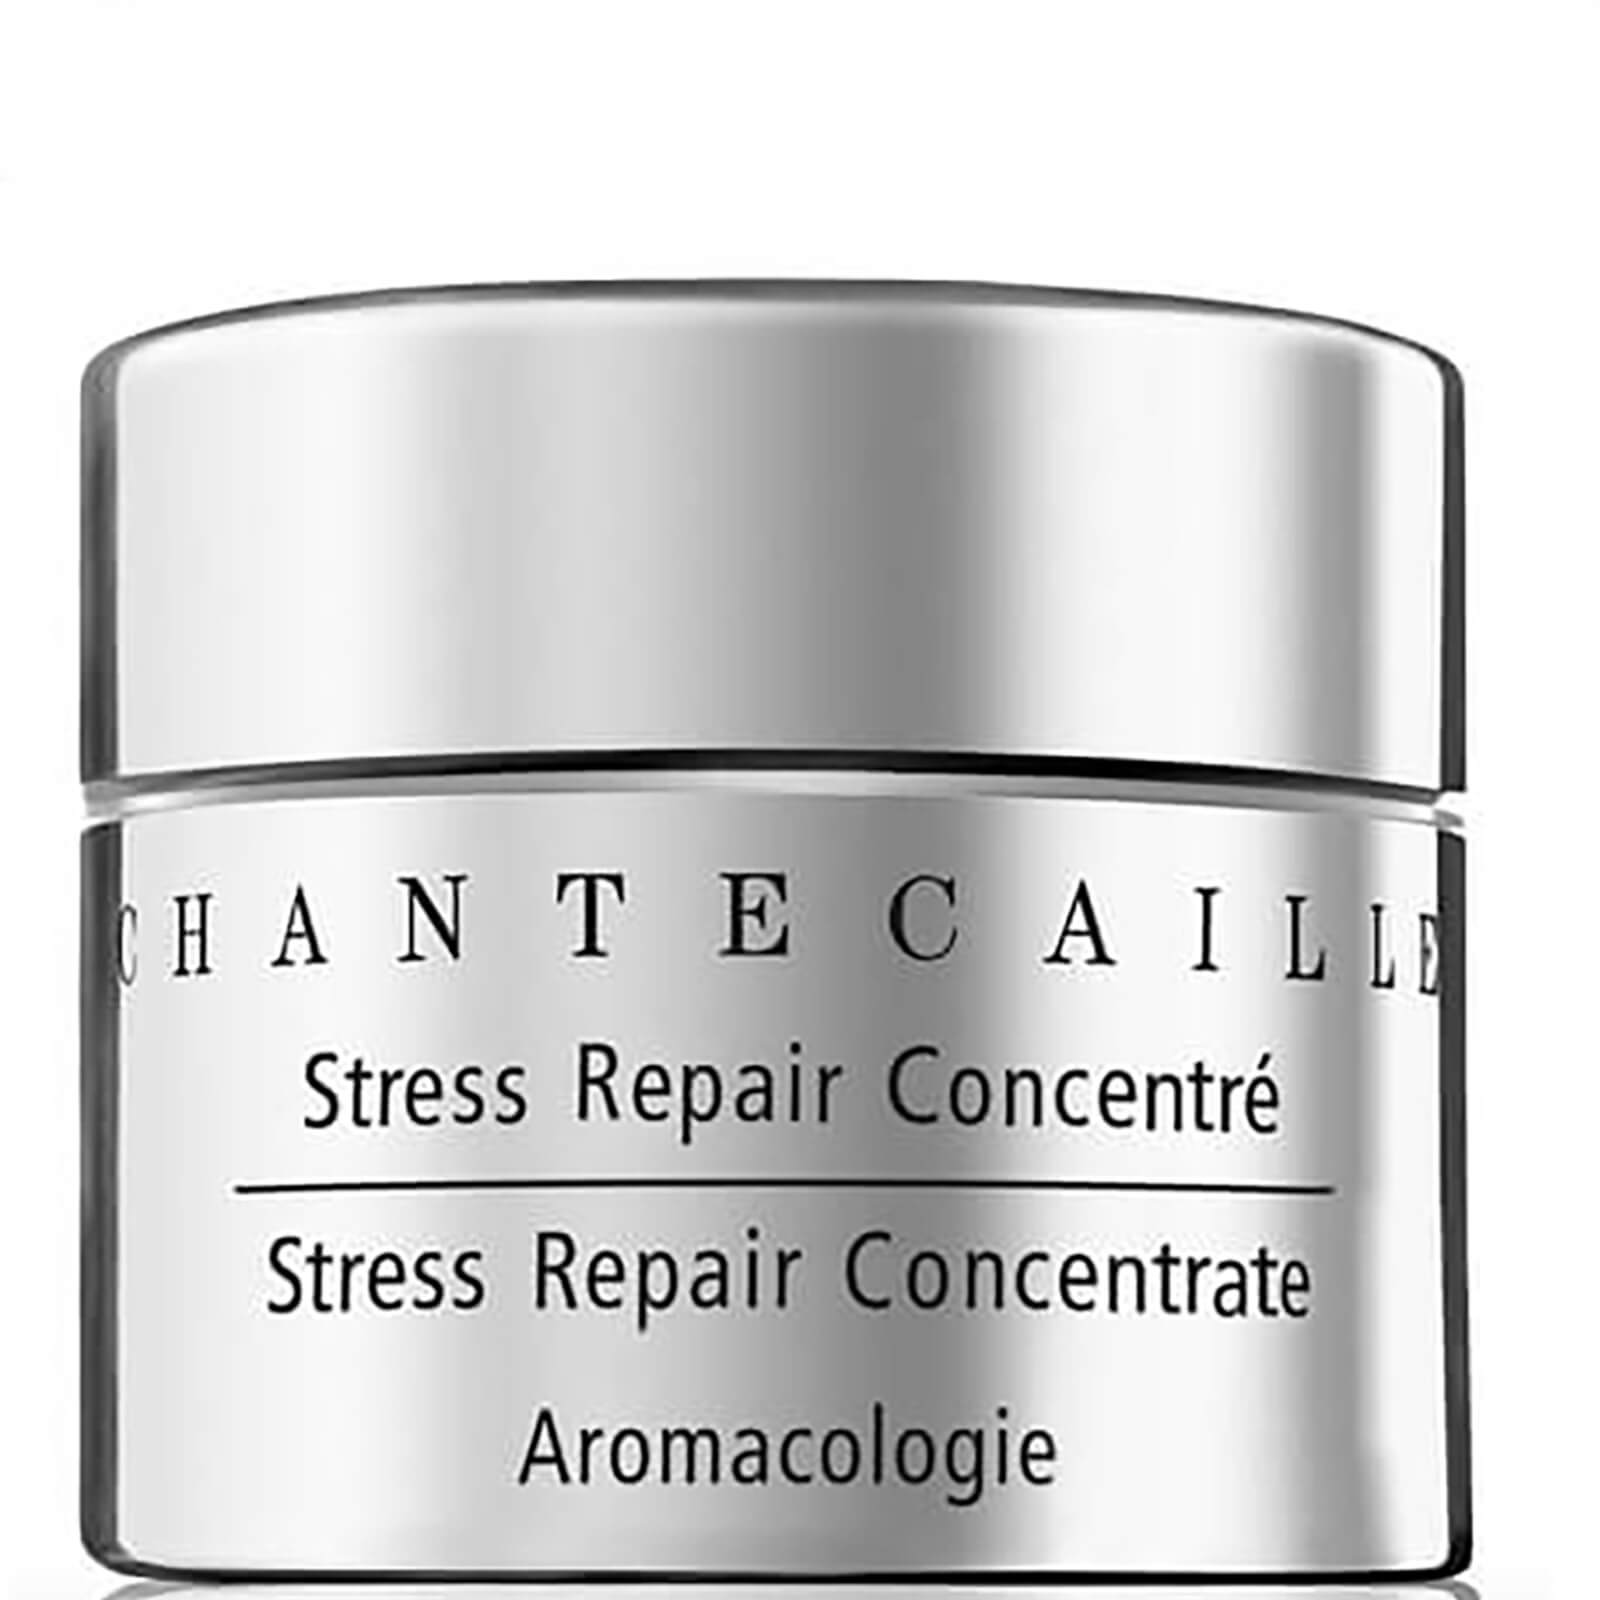 Stress Repair Concentrate de Chantecaille 15ml